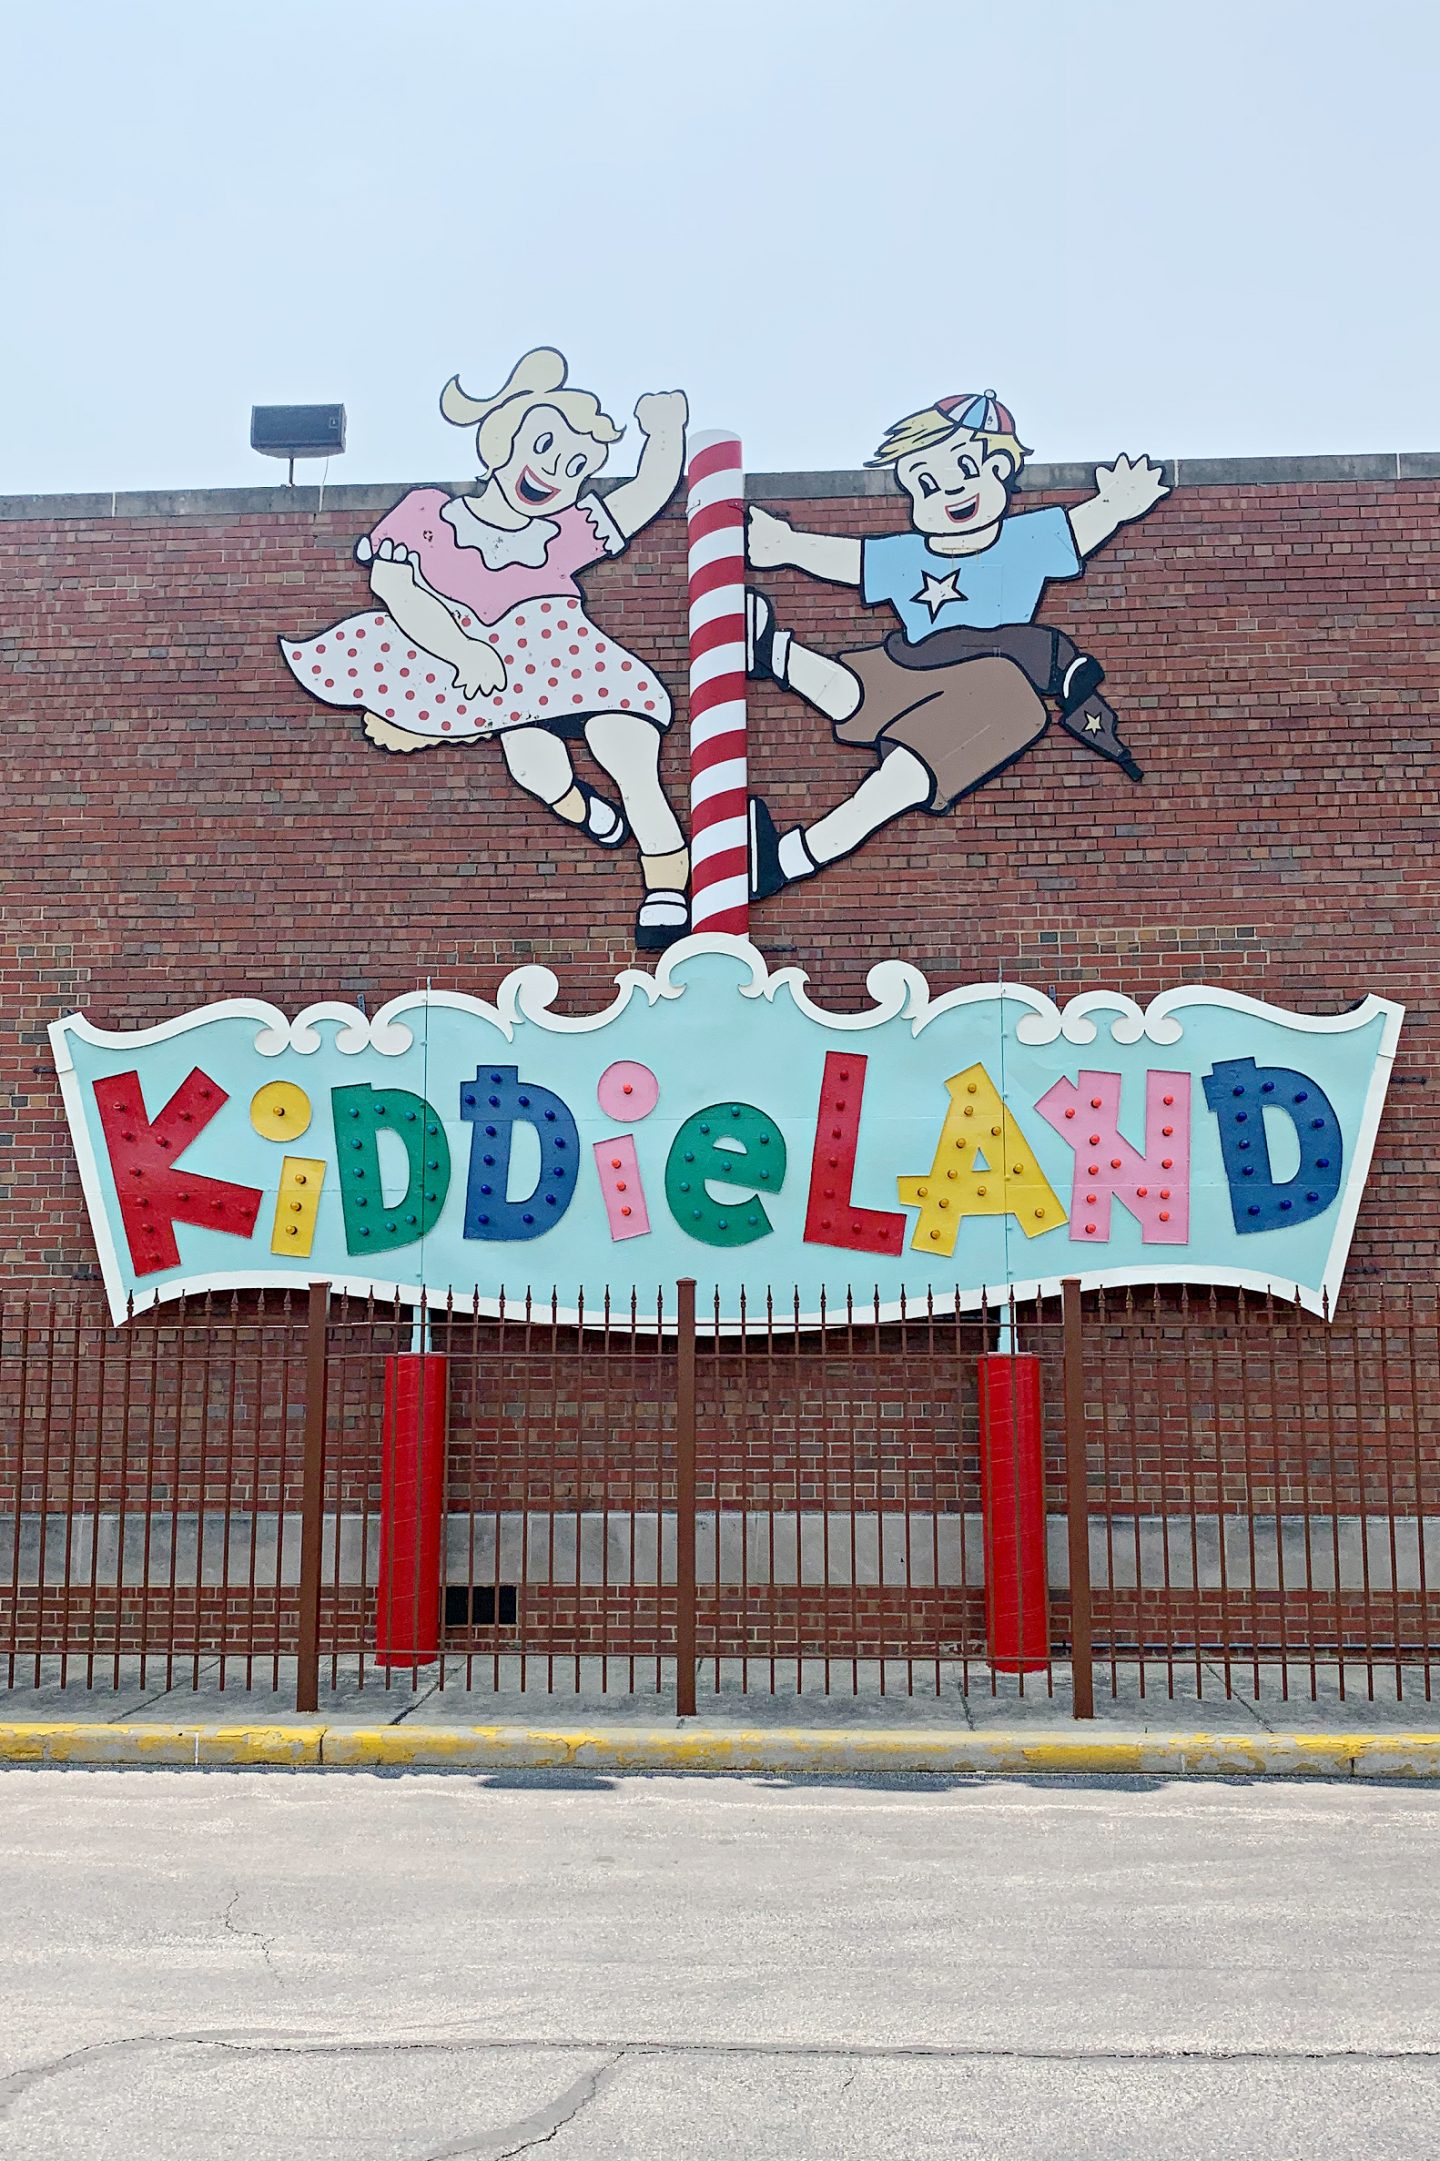 100 Life Goals: Revisiting Childhood Memories; the Kiddieland Sign